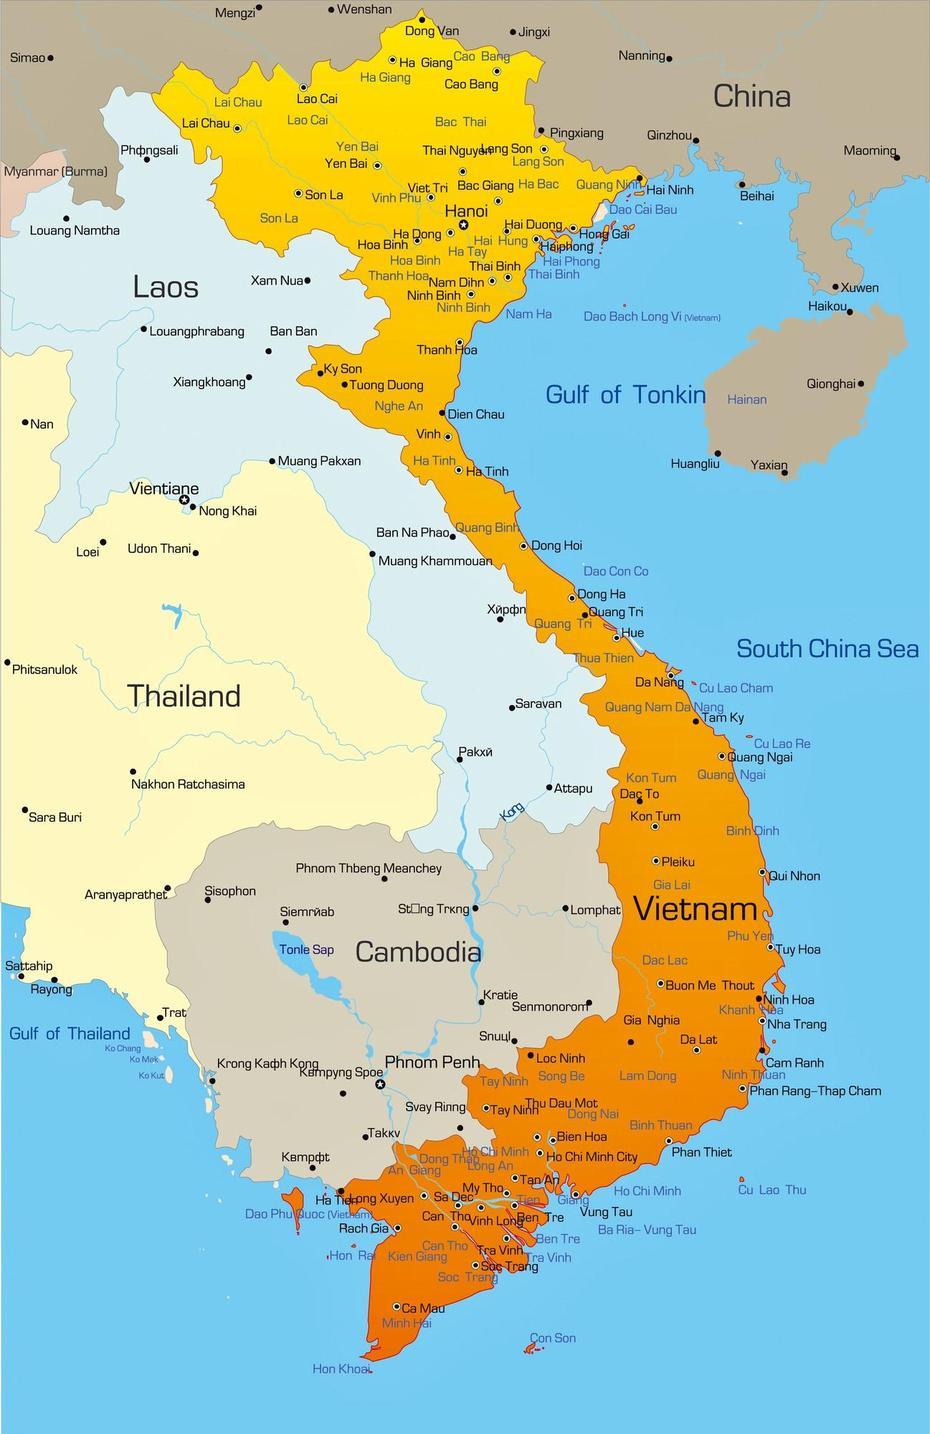 Cities Map Of Vietnam – Orangesmile, Hố Nai, Vietnam, Hoa Binh Vietnam, Thung Nai Hoa Binh